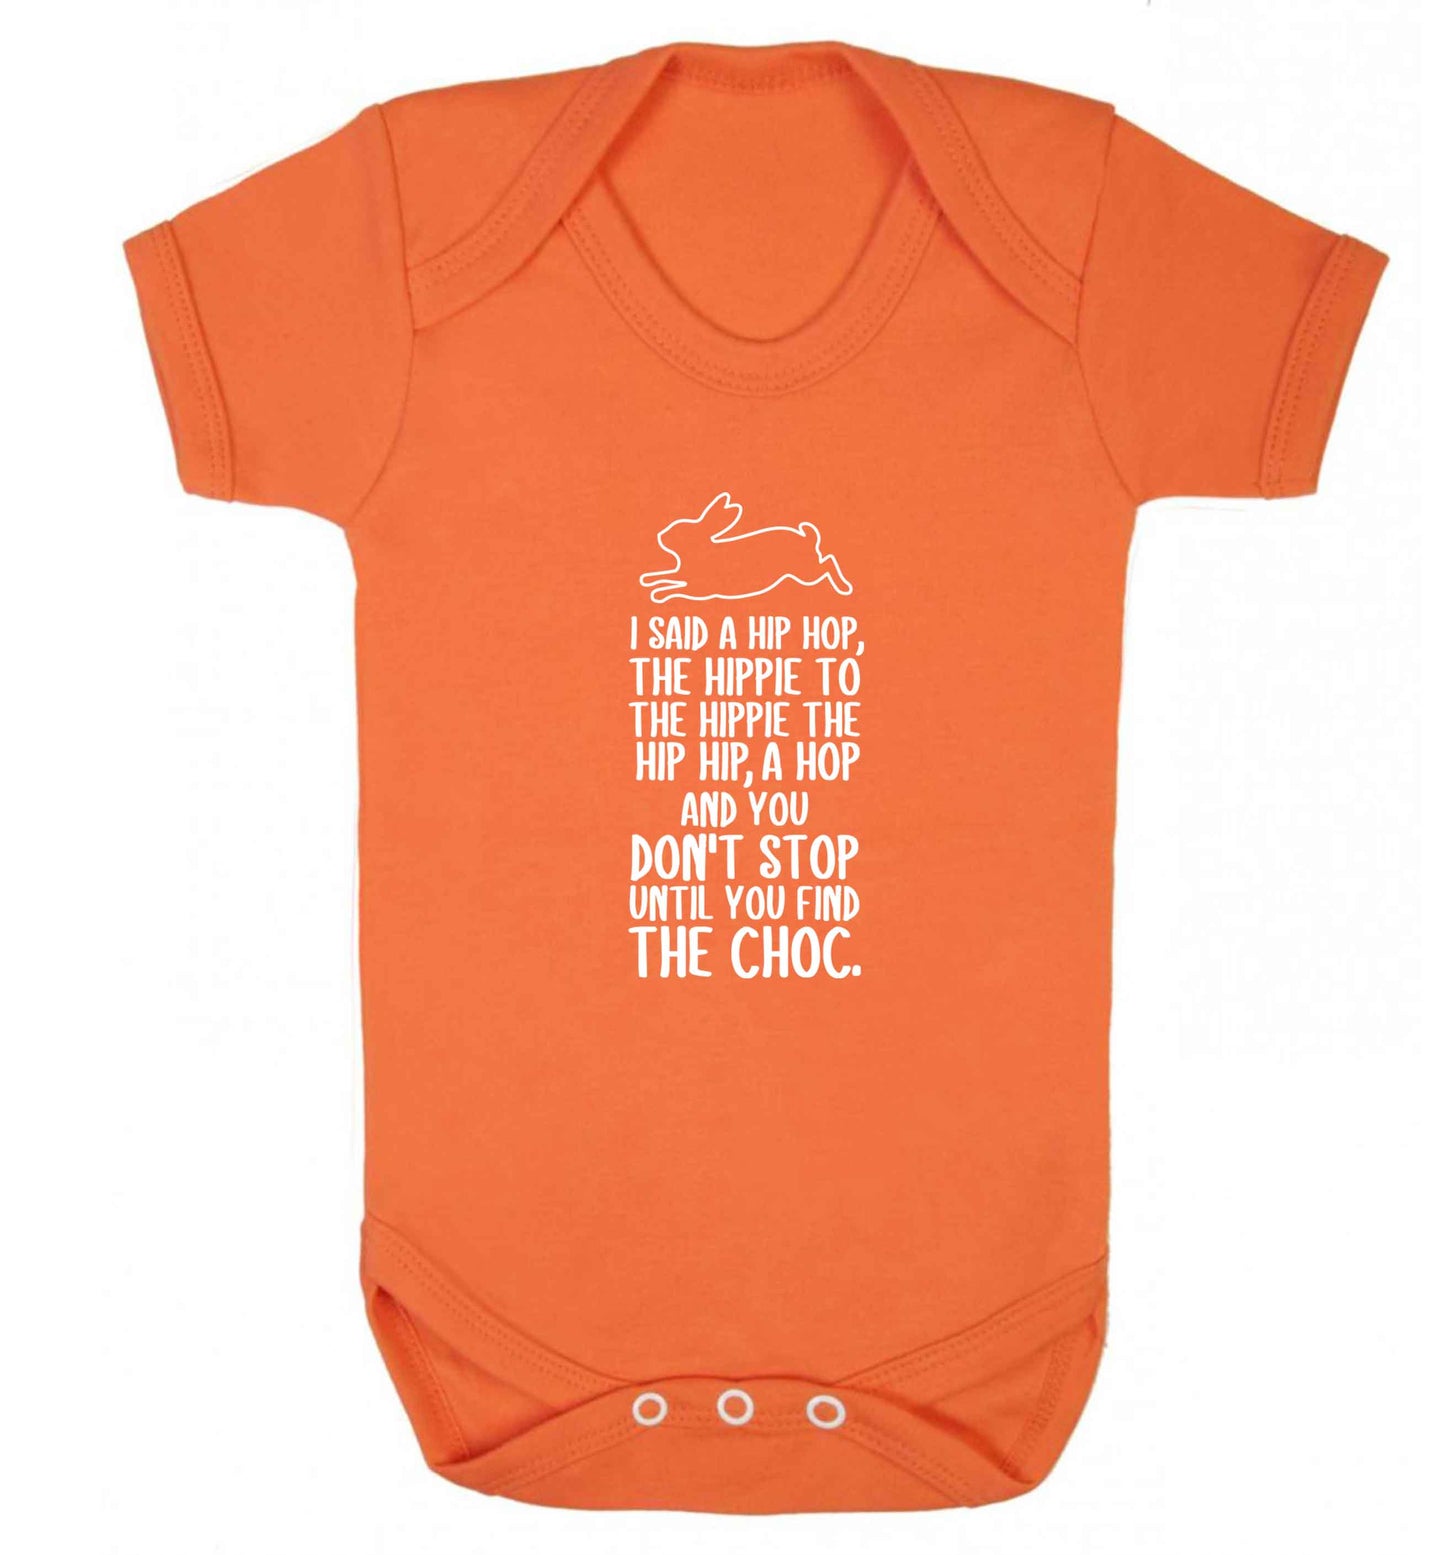 Don't stop until you find the choc baby vest orange 18-24 months